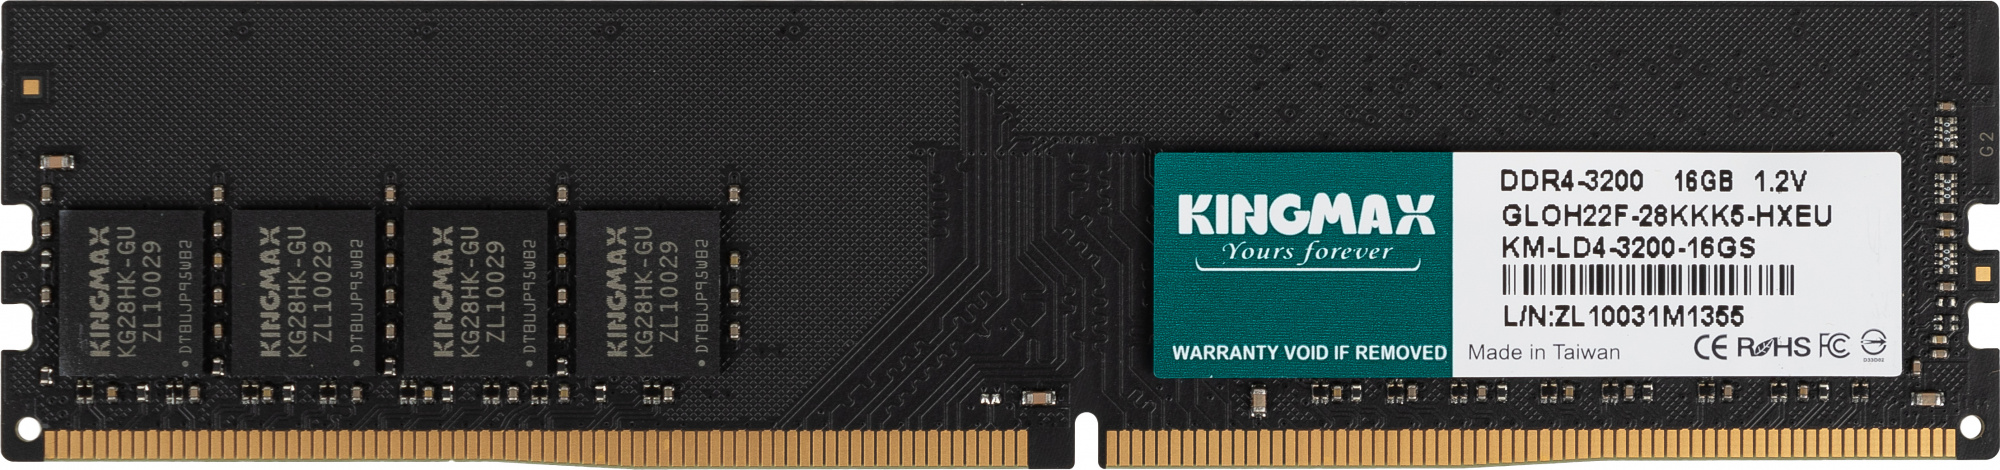   Kingmax DDR4 - 16 3200, DIMM, [KM-LD4-3200-16GS] Ret